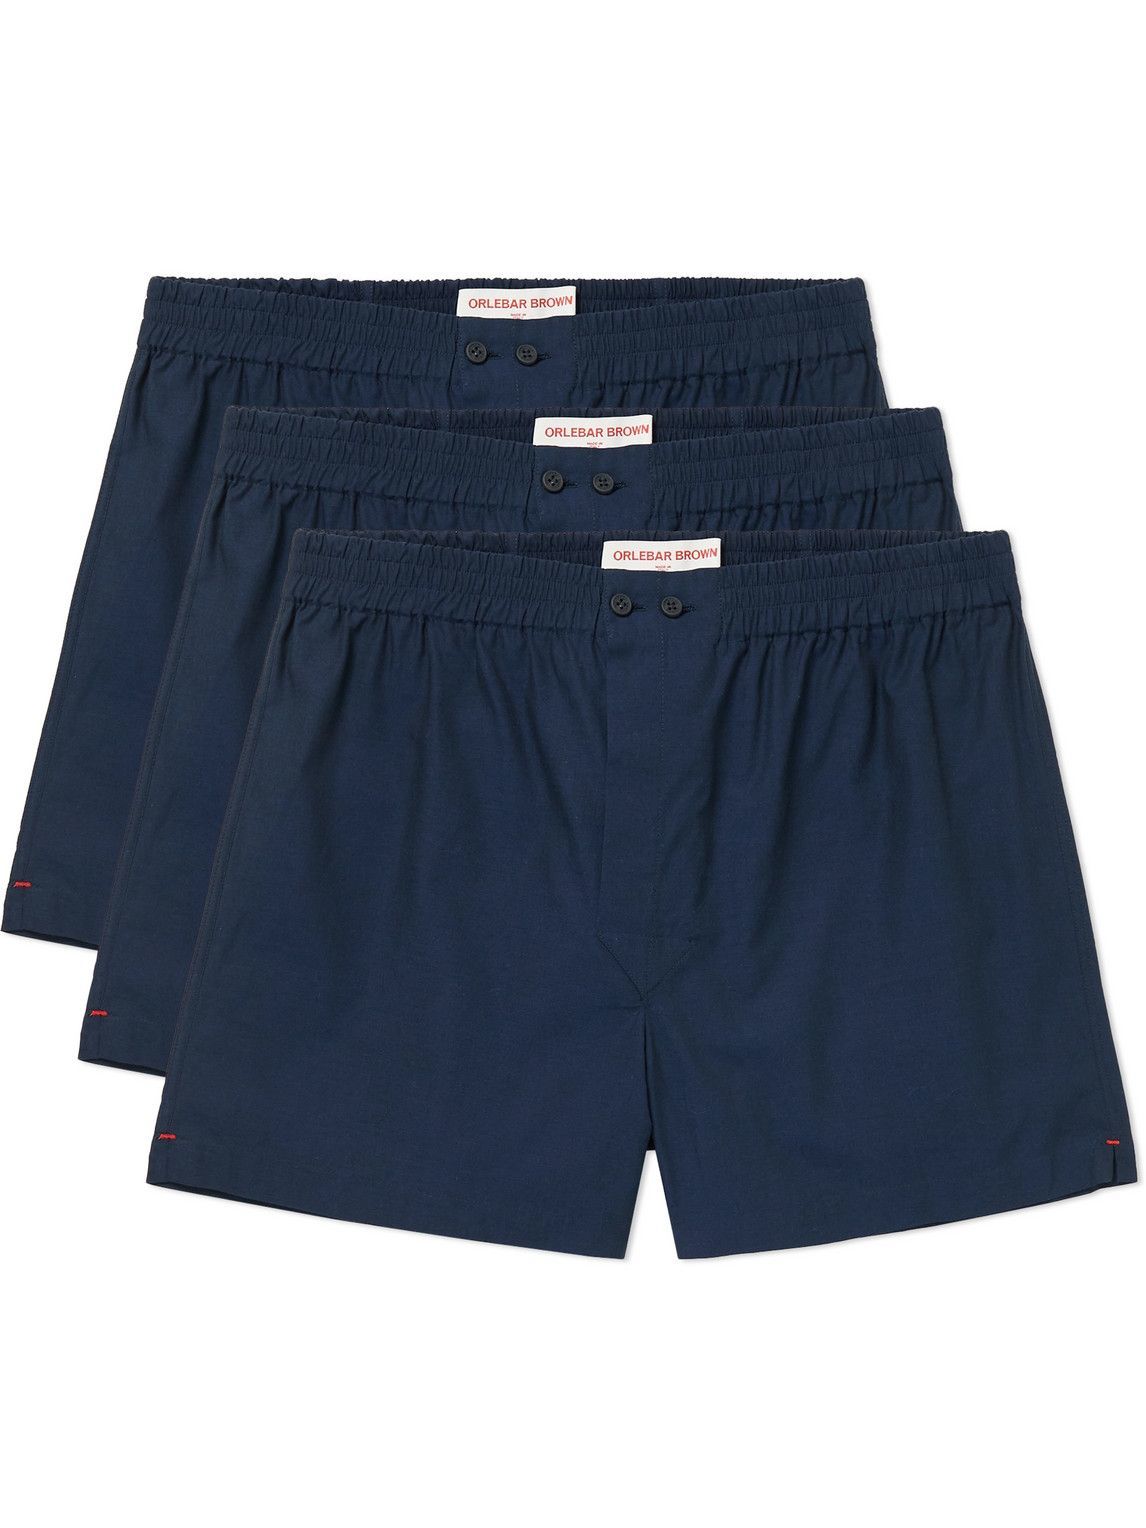 Orlebar Brown - Three-Pack Cotton Boxer Shorts - Blue Orlebar Brown